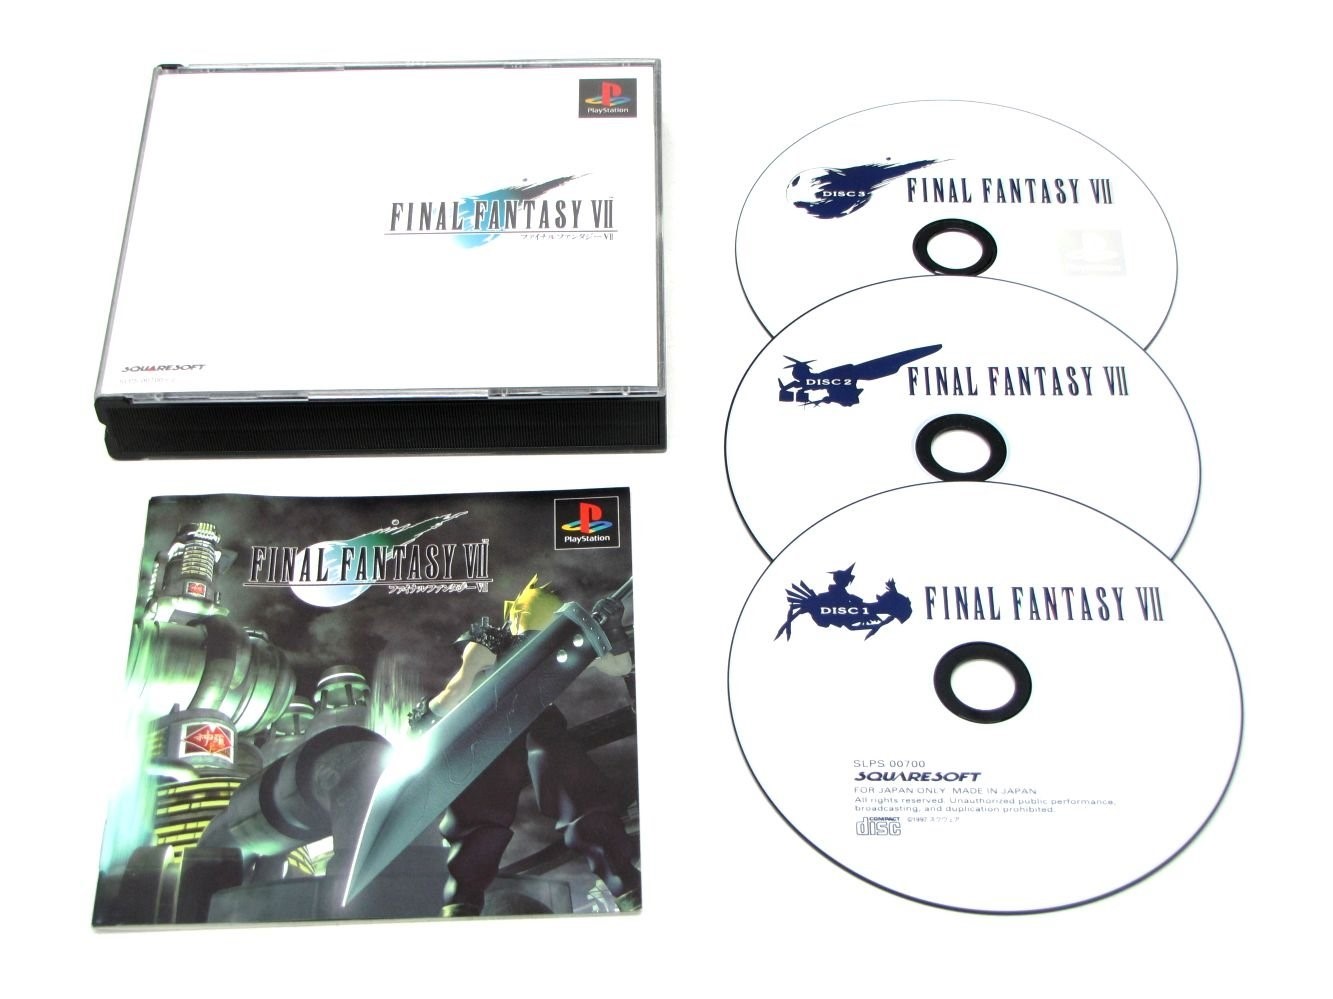 Диска final fantasy. PLAYSTATION 1 Final Fantasy диск. Final Fantasy VII Remake диск ПС 4. Final Fantasy VII плейстейшен 1. Final Fantasy 7 ps1 диск.